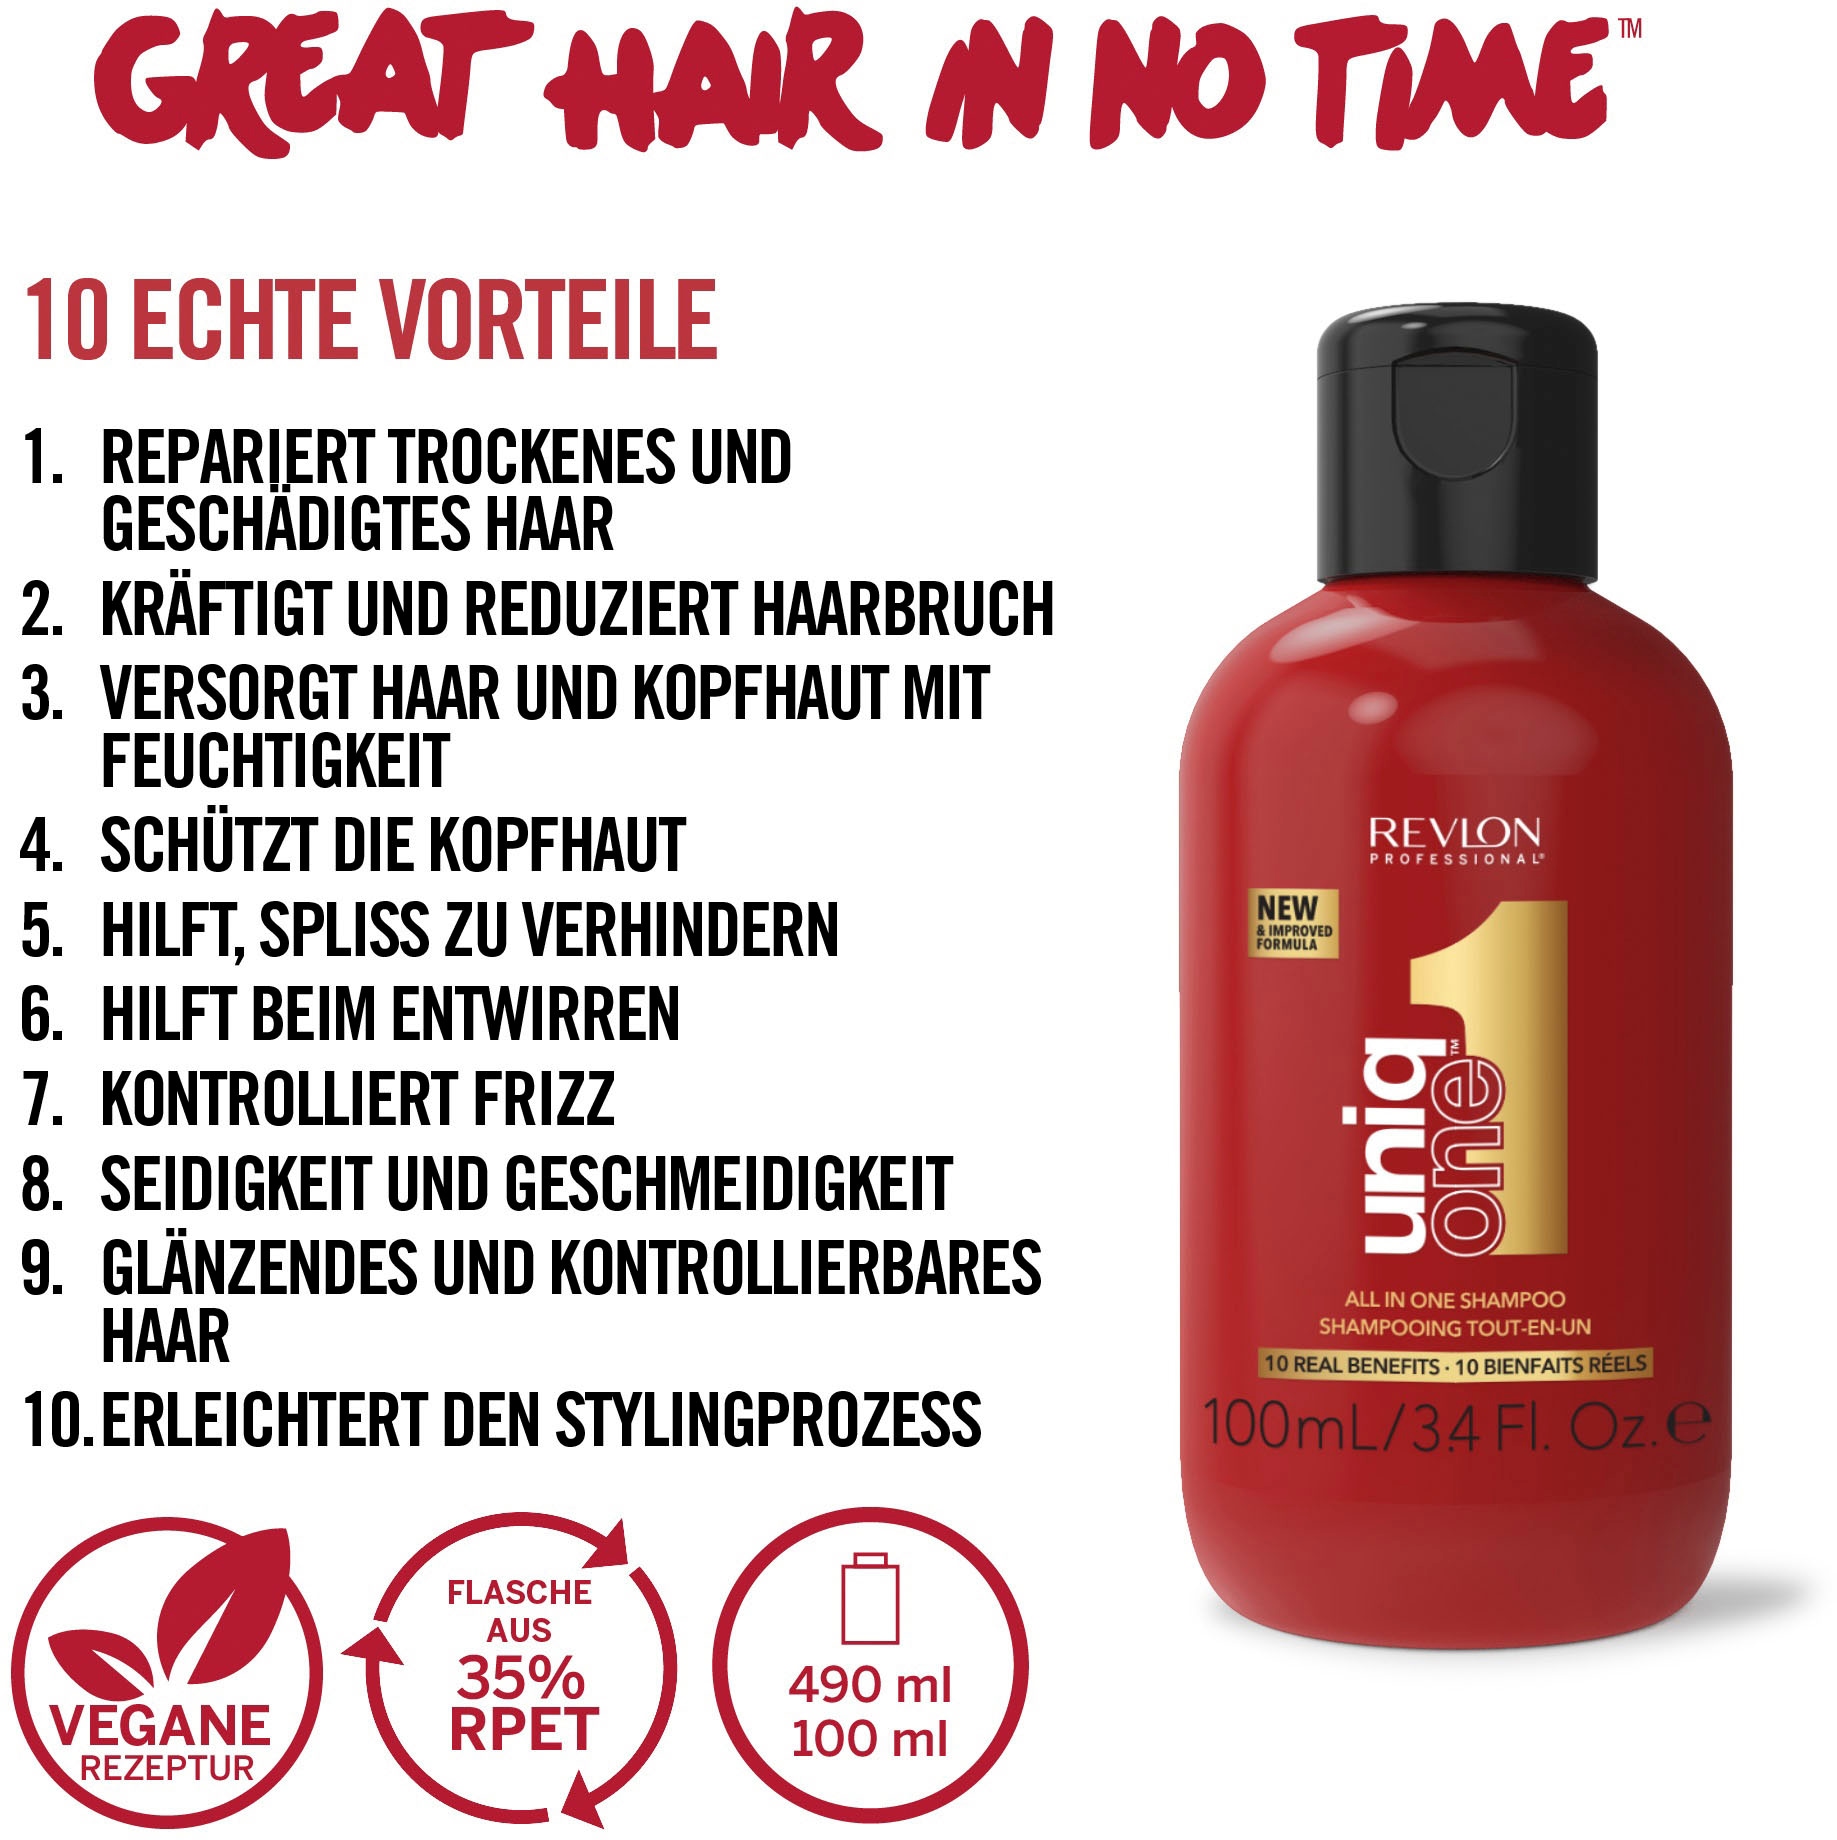 REVLON PROFESSIONAL Haarpflege-Set »Uniqone All Care Shop One Online Great OTTO im Set Hair ml« In 250